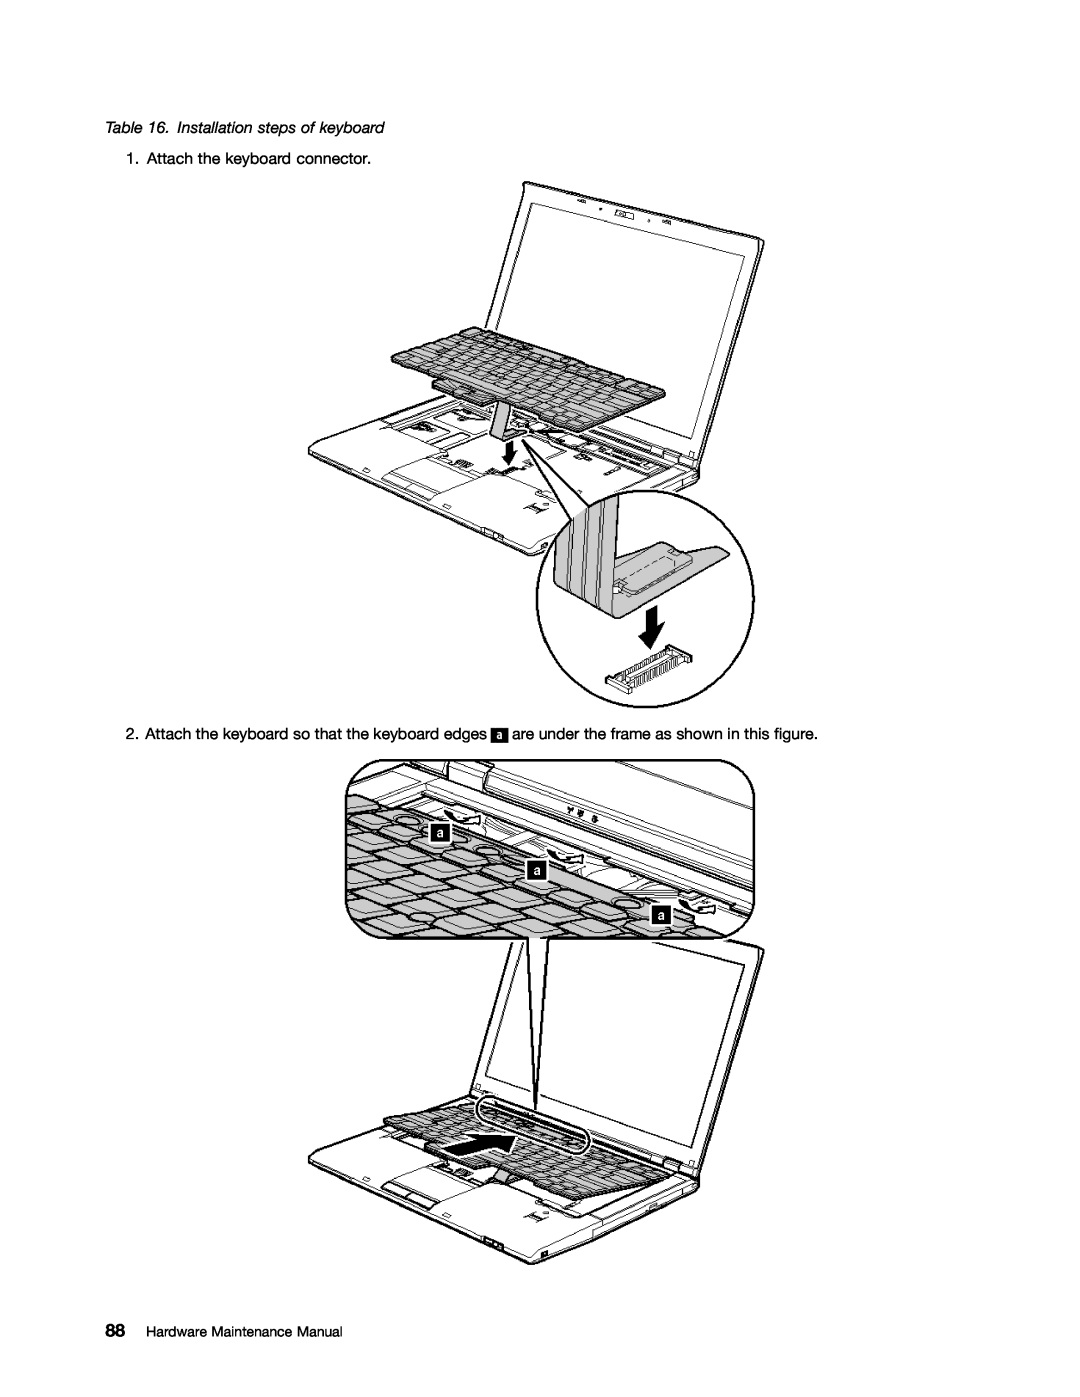 IBM T400S, T410SI manual Hardware Maintenance Manual 